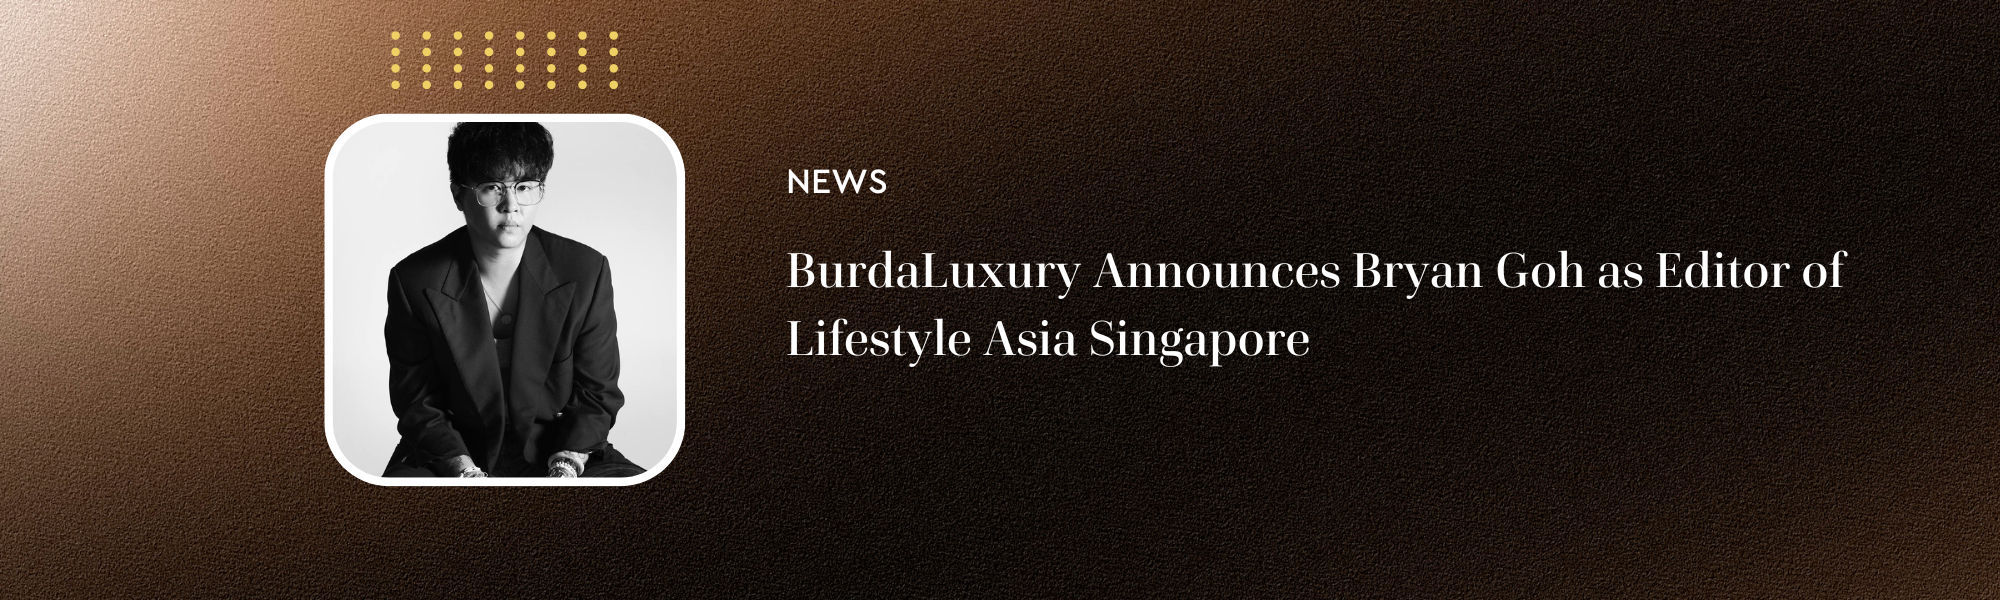 BurdaLuxury Announces Bryan Goh as Editor of Lifestyle Asia Singapore